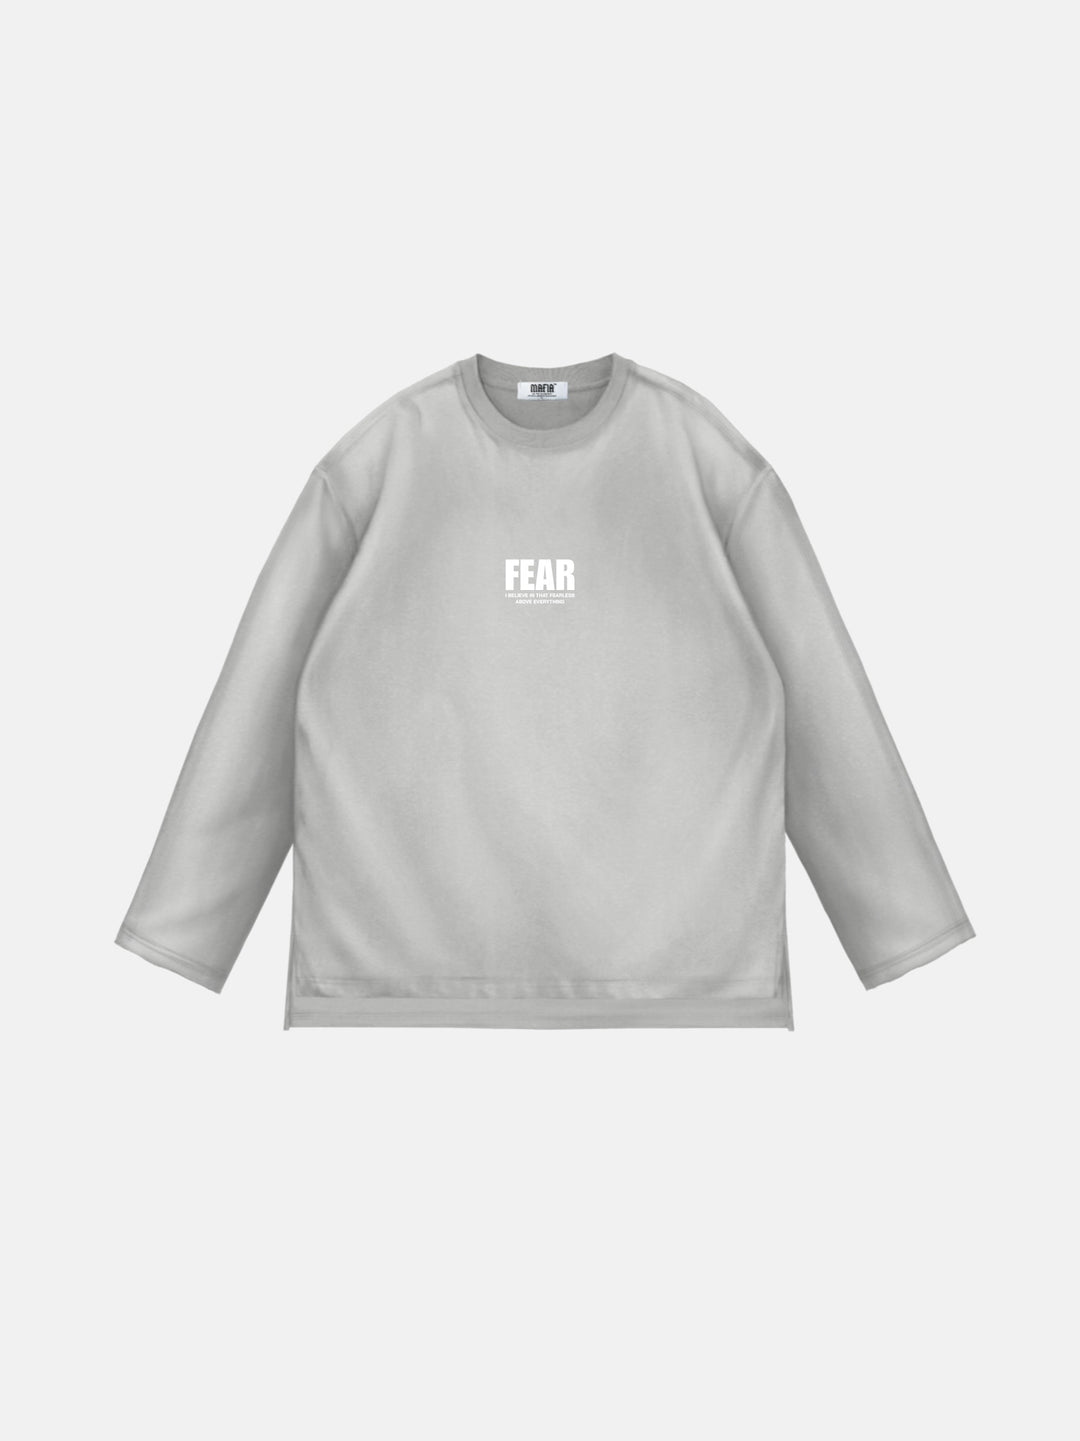 Oversize Fear Sweater - Grey